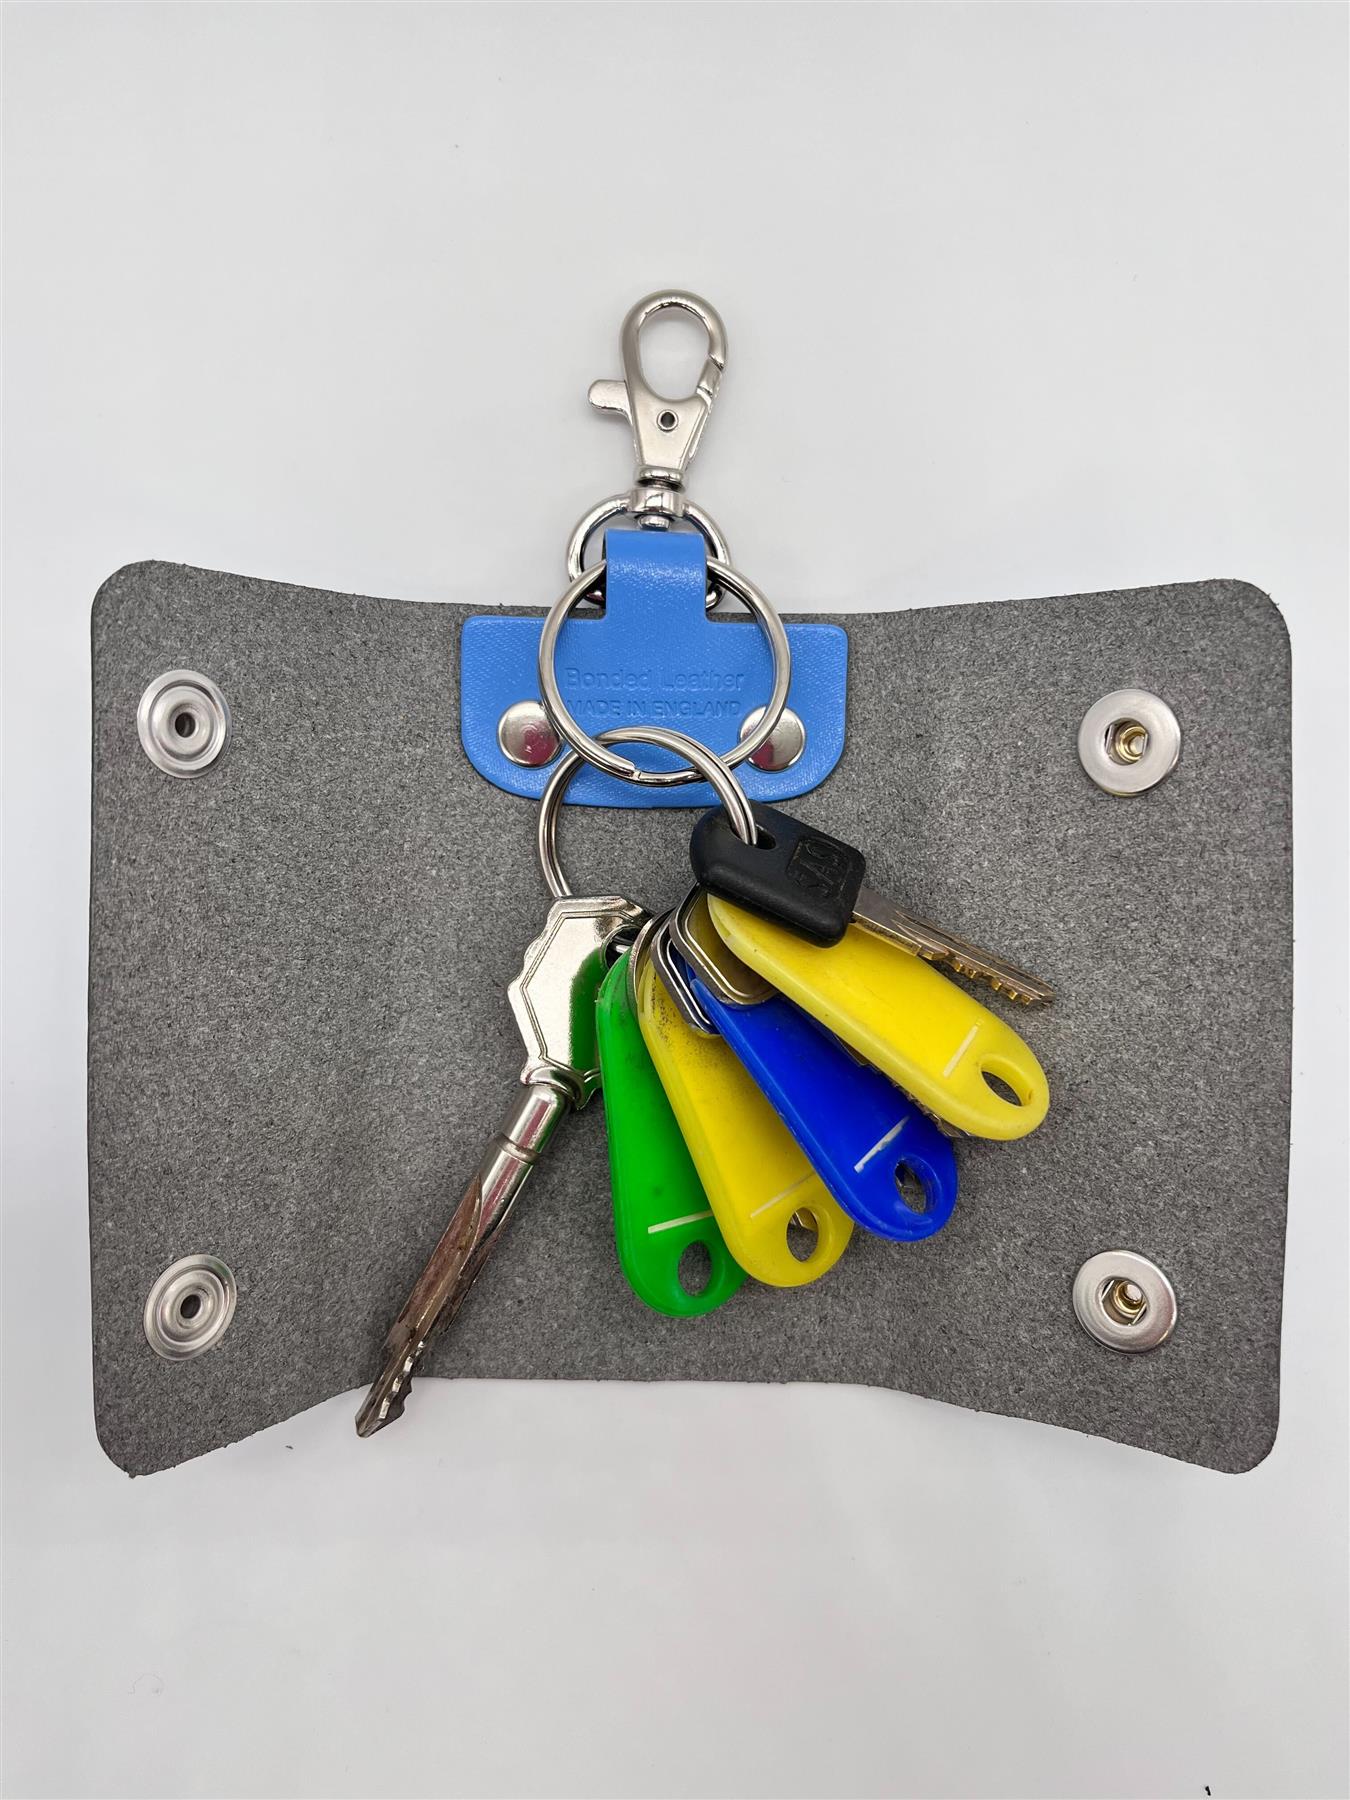 Ten ways to organize and clean your car! DIY purse holder | Diy bag, Diy purse  holder, Bags